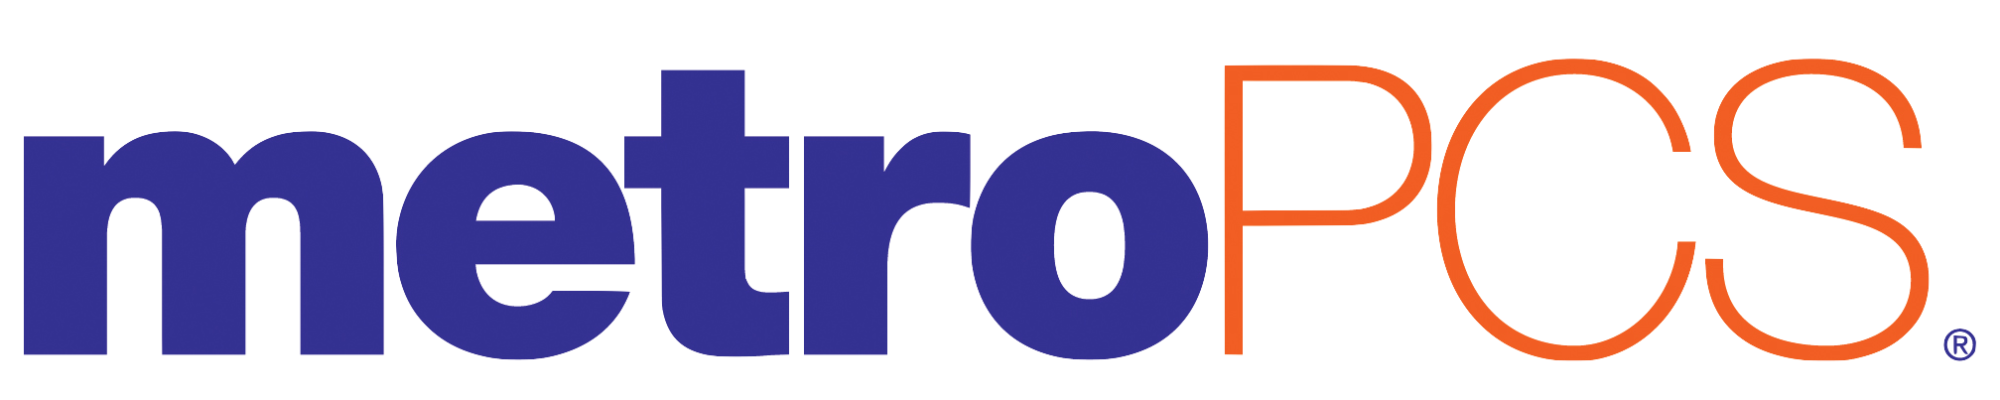 MetroPCS-logo1